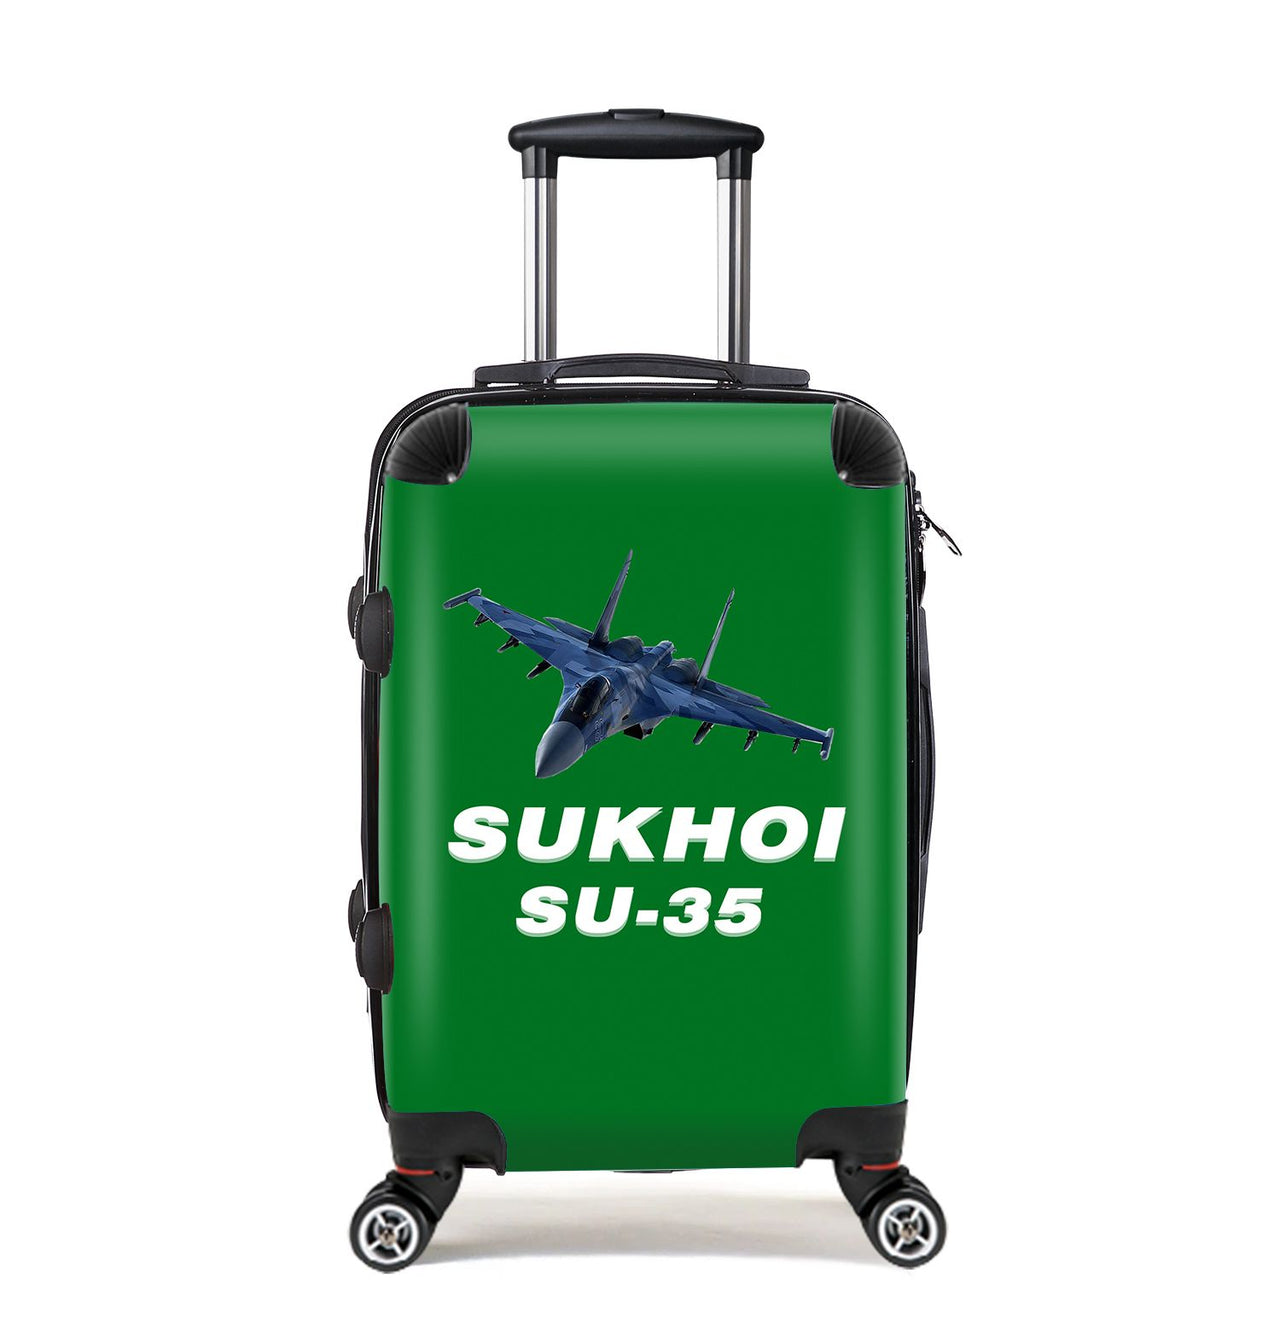 The Sukhoi SU-35 Designed Cabin Size Luggages